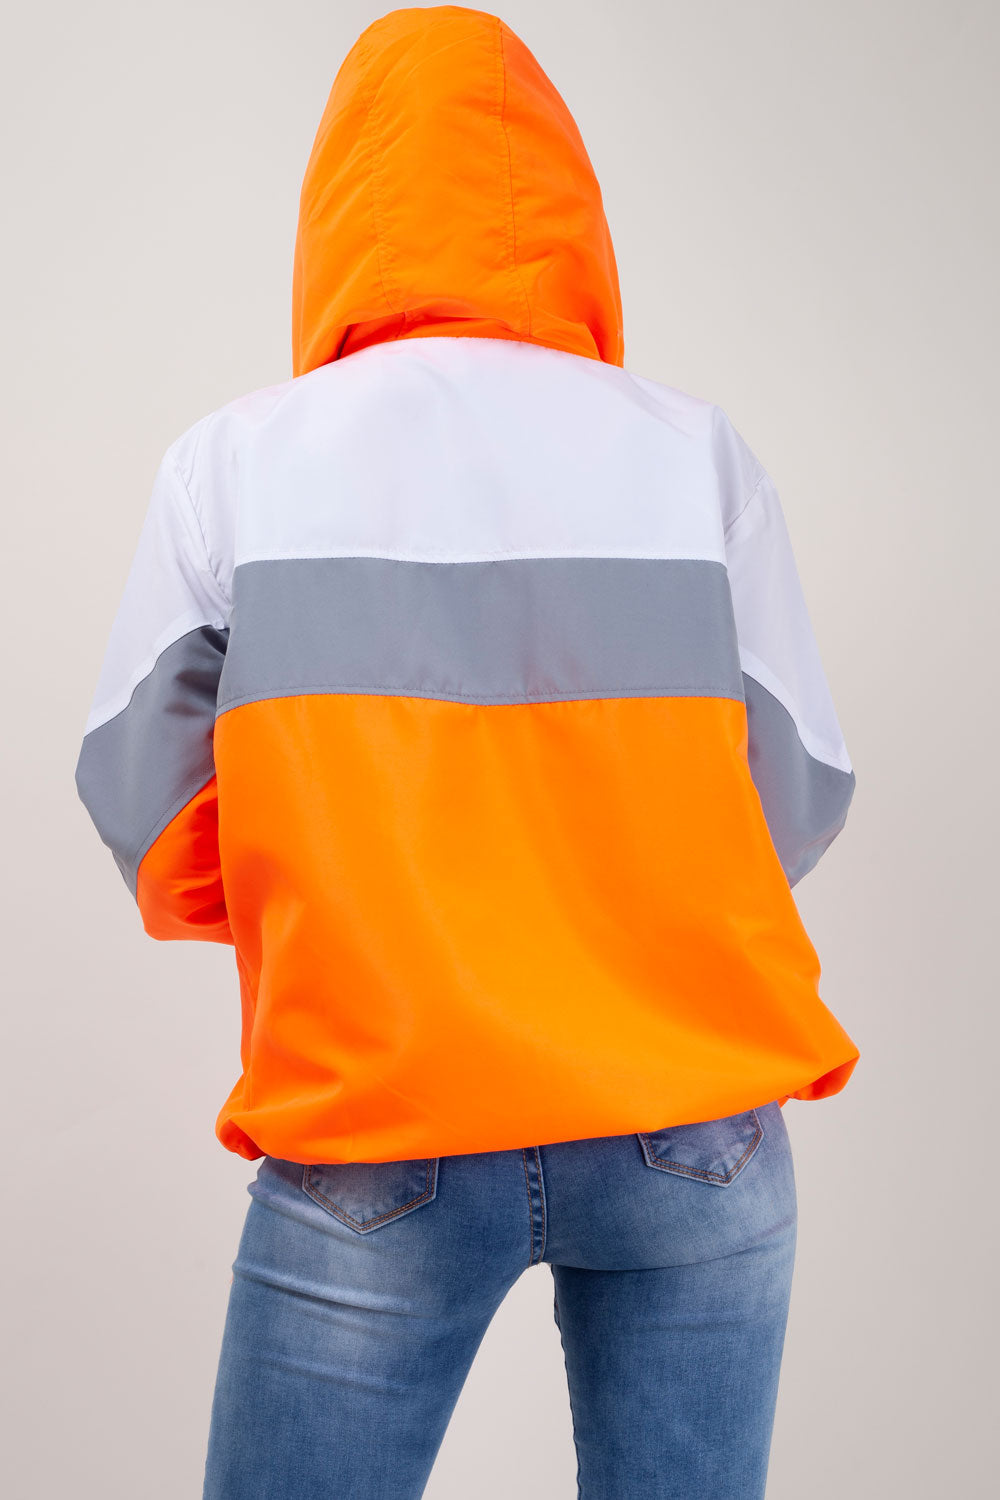 neon orange festival outfit 